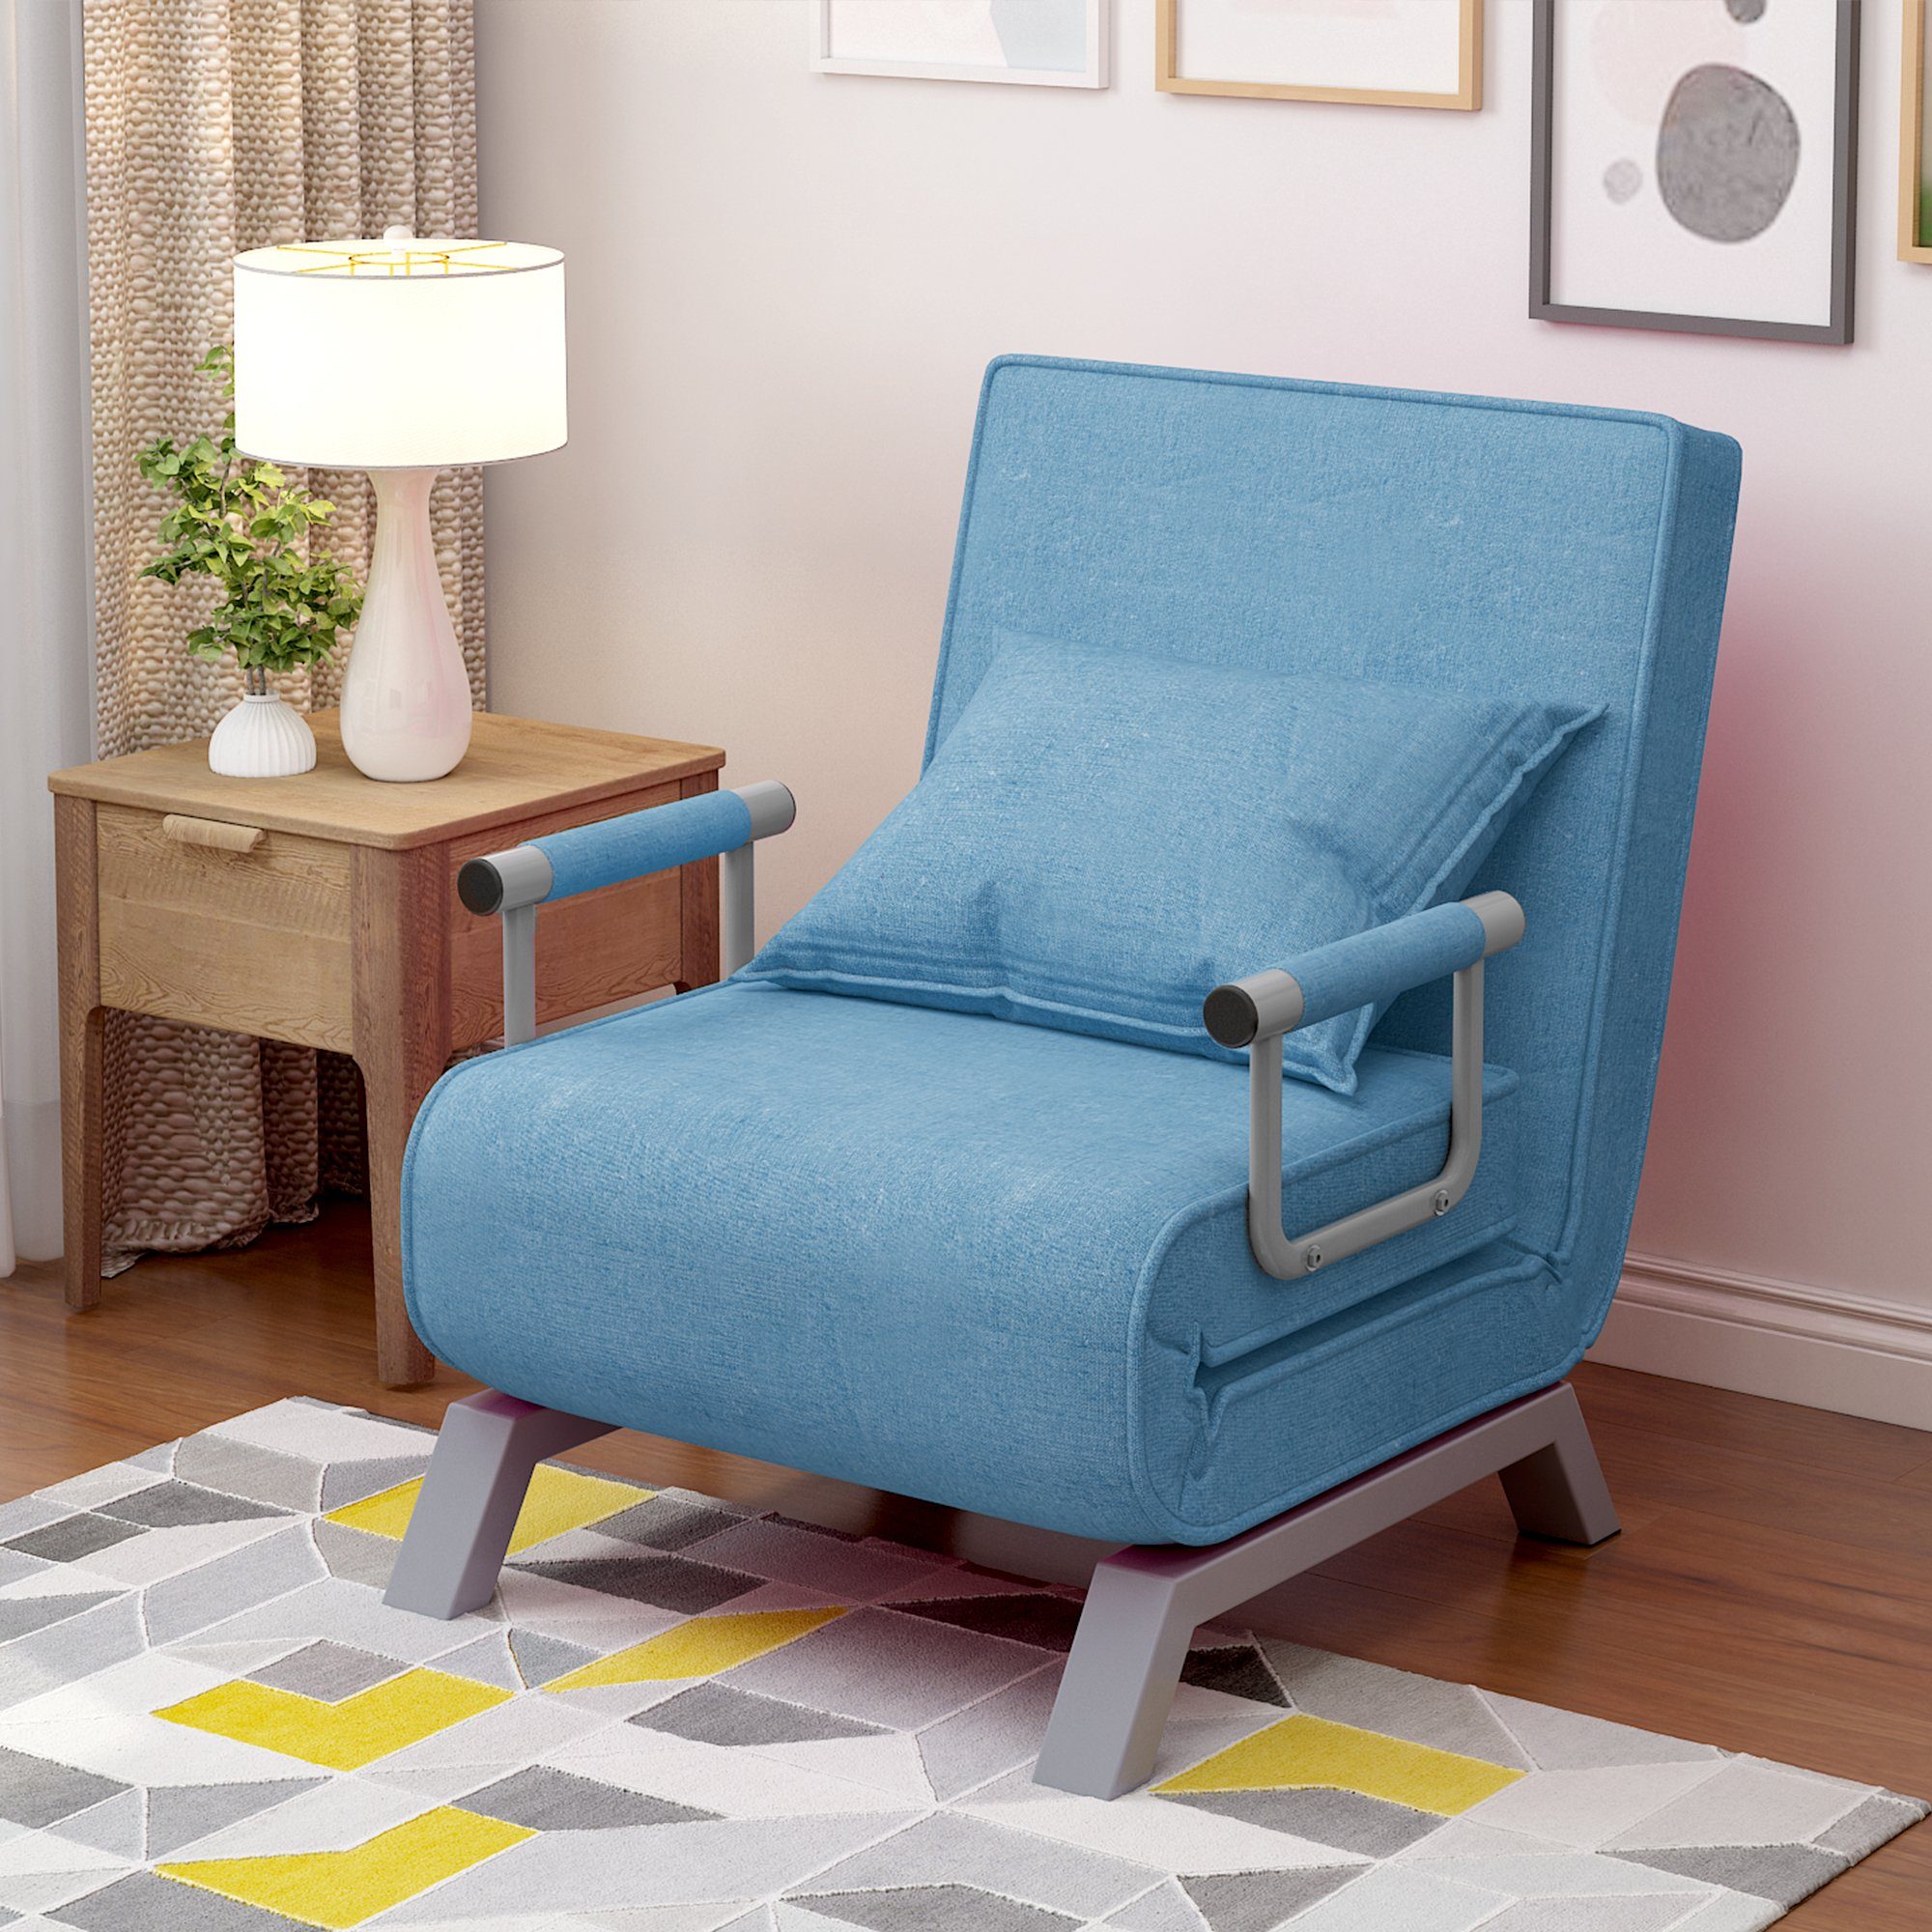 Flieks Relaxliege, faltbarer Schlafsessel, klappbarer Sessel mit Kissen, Bürosessel Blau